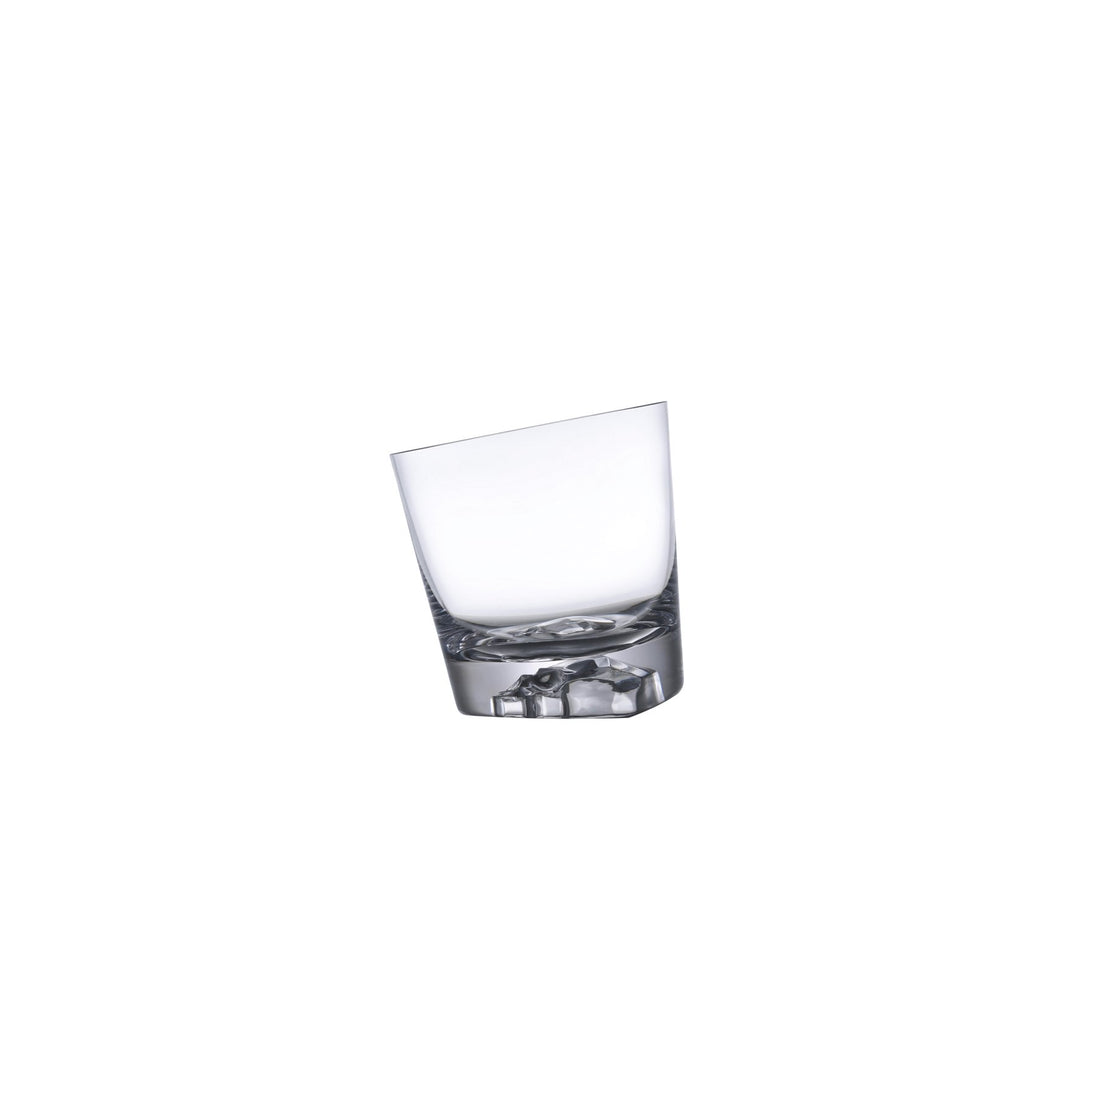 NUDE Memento Mori whisky glass empty